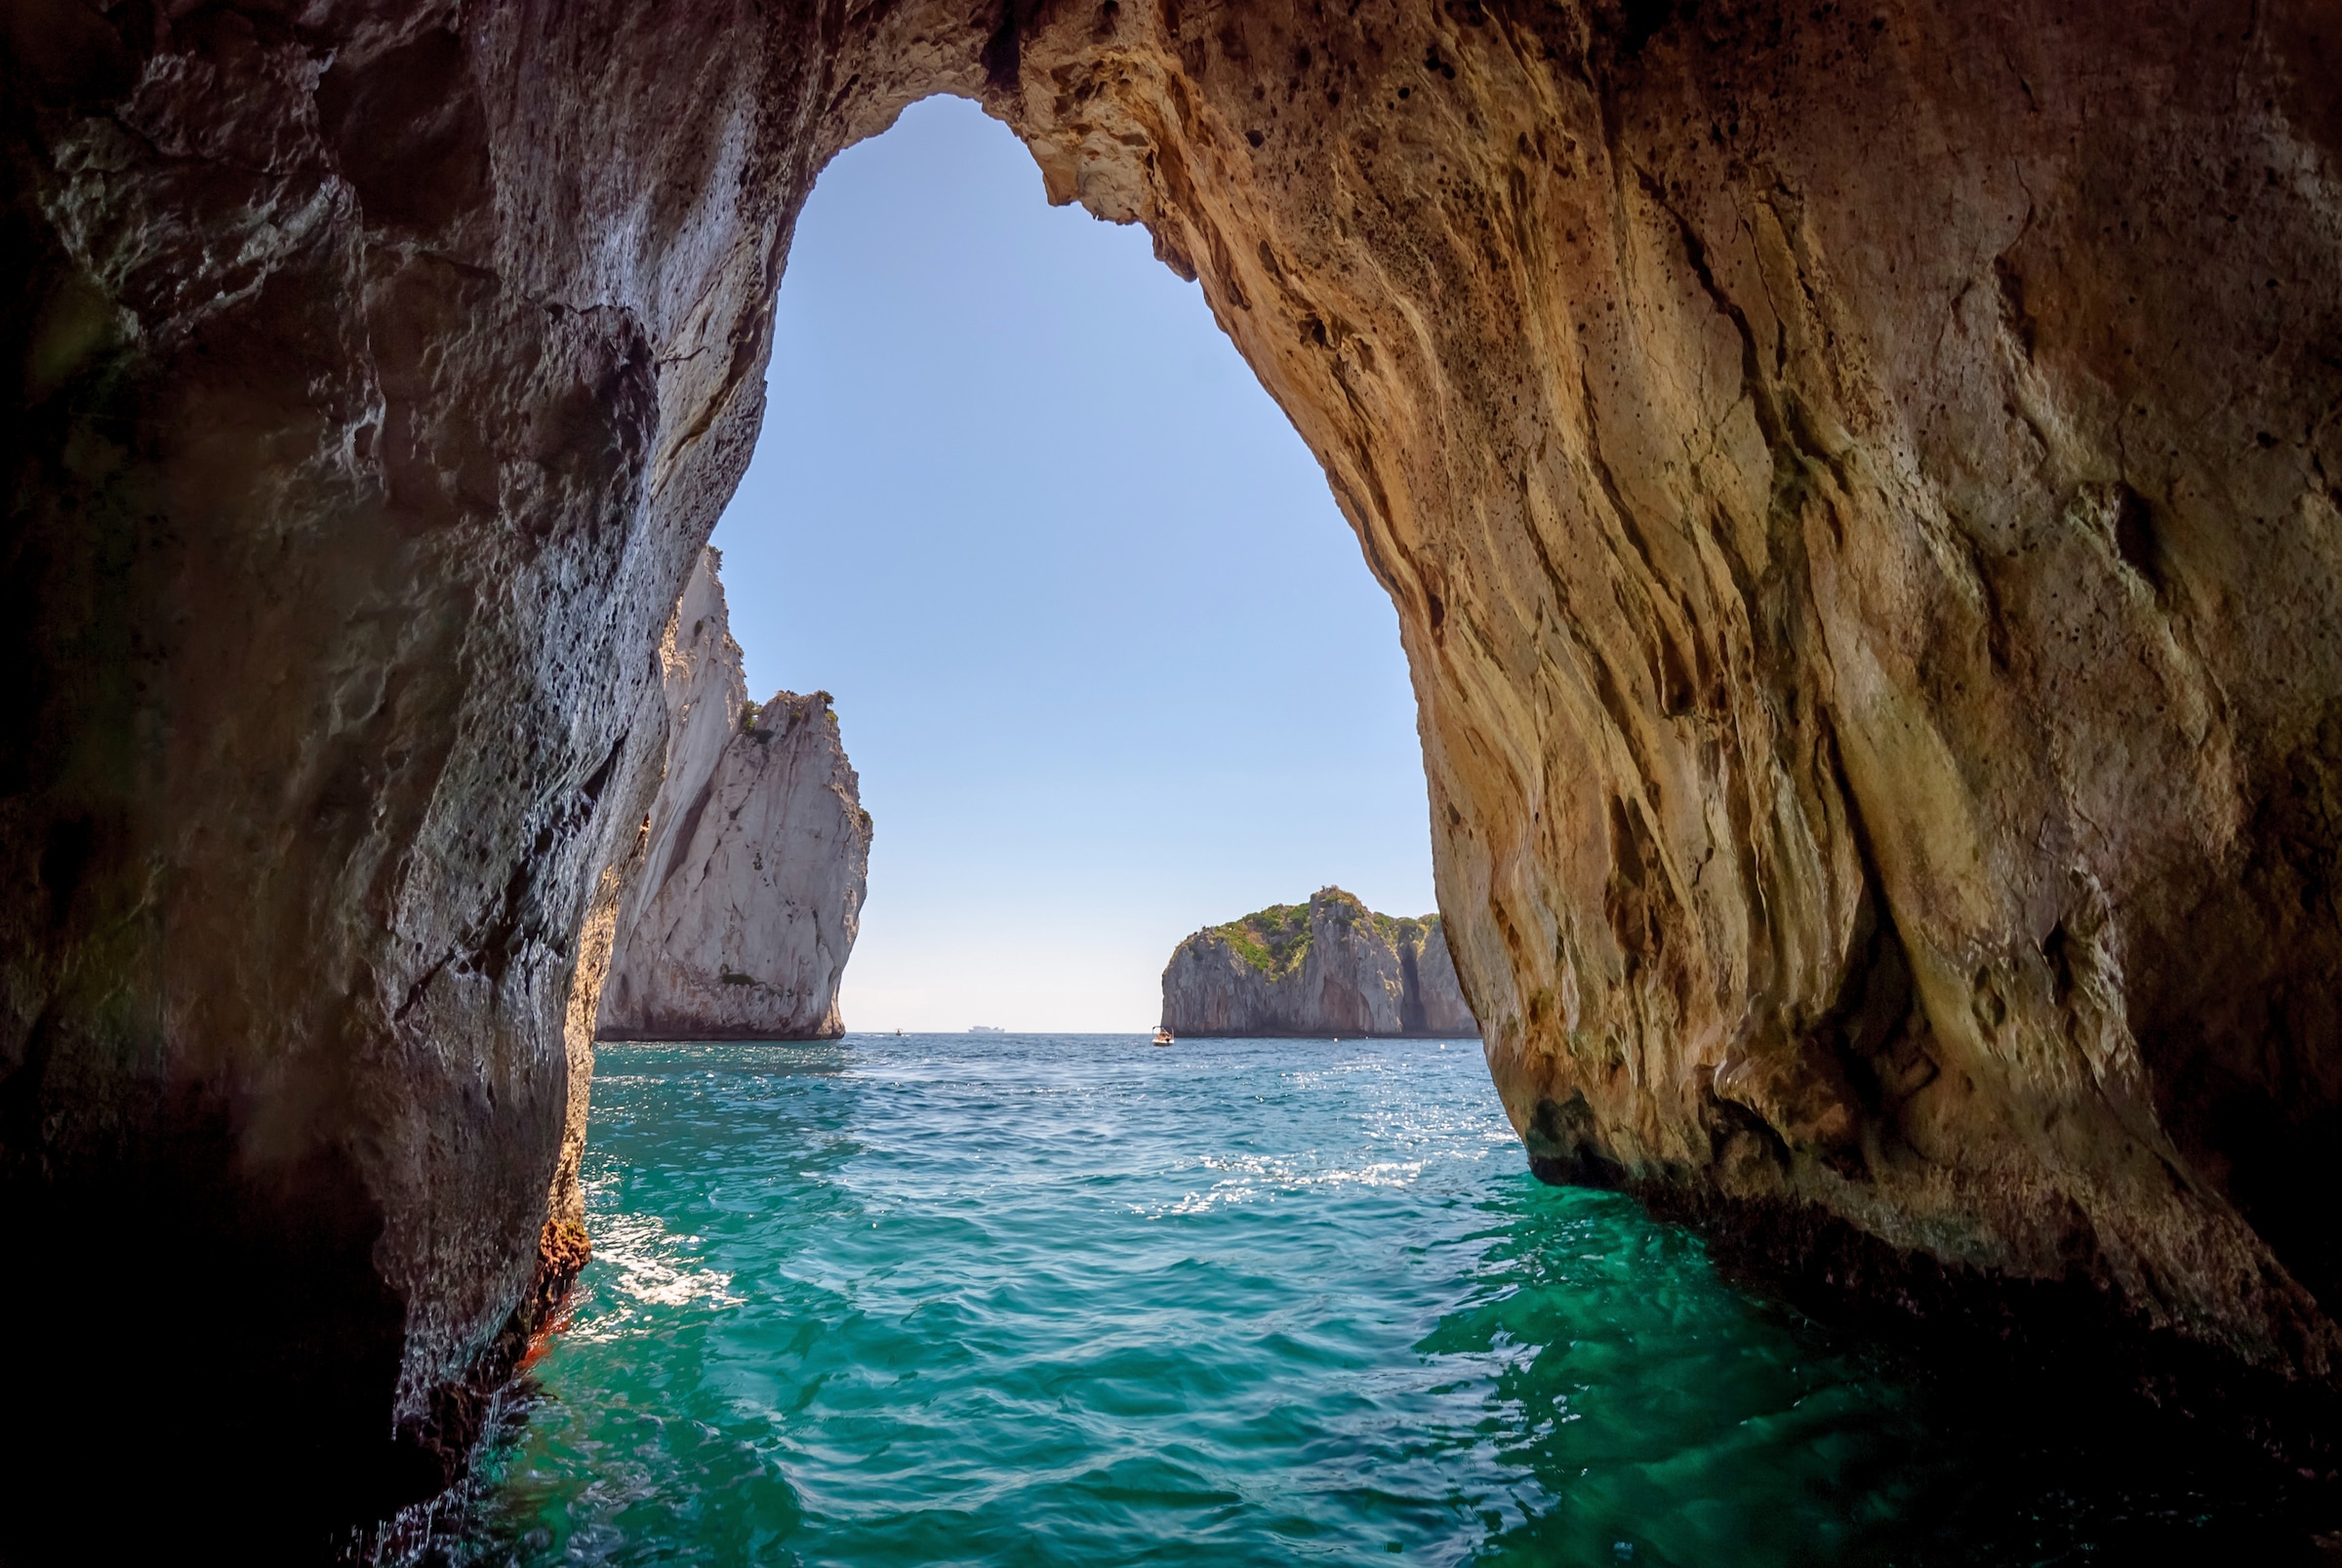 Papermoon Fototapete "Blue Grotto in Capri island"